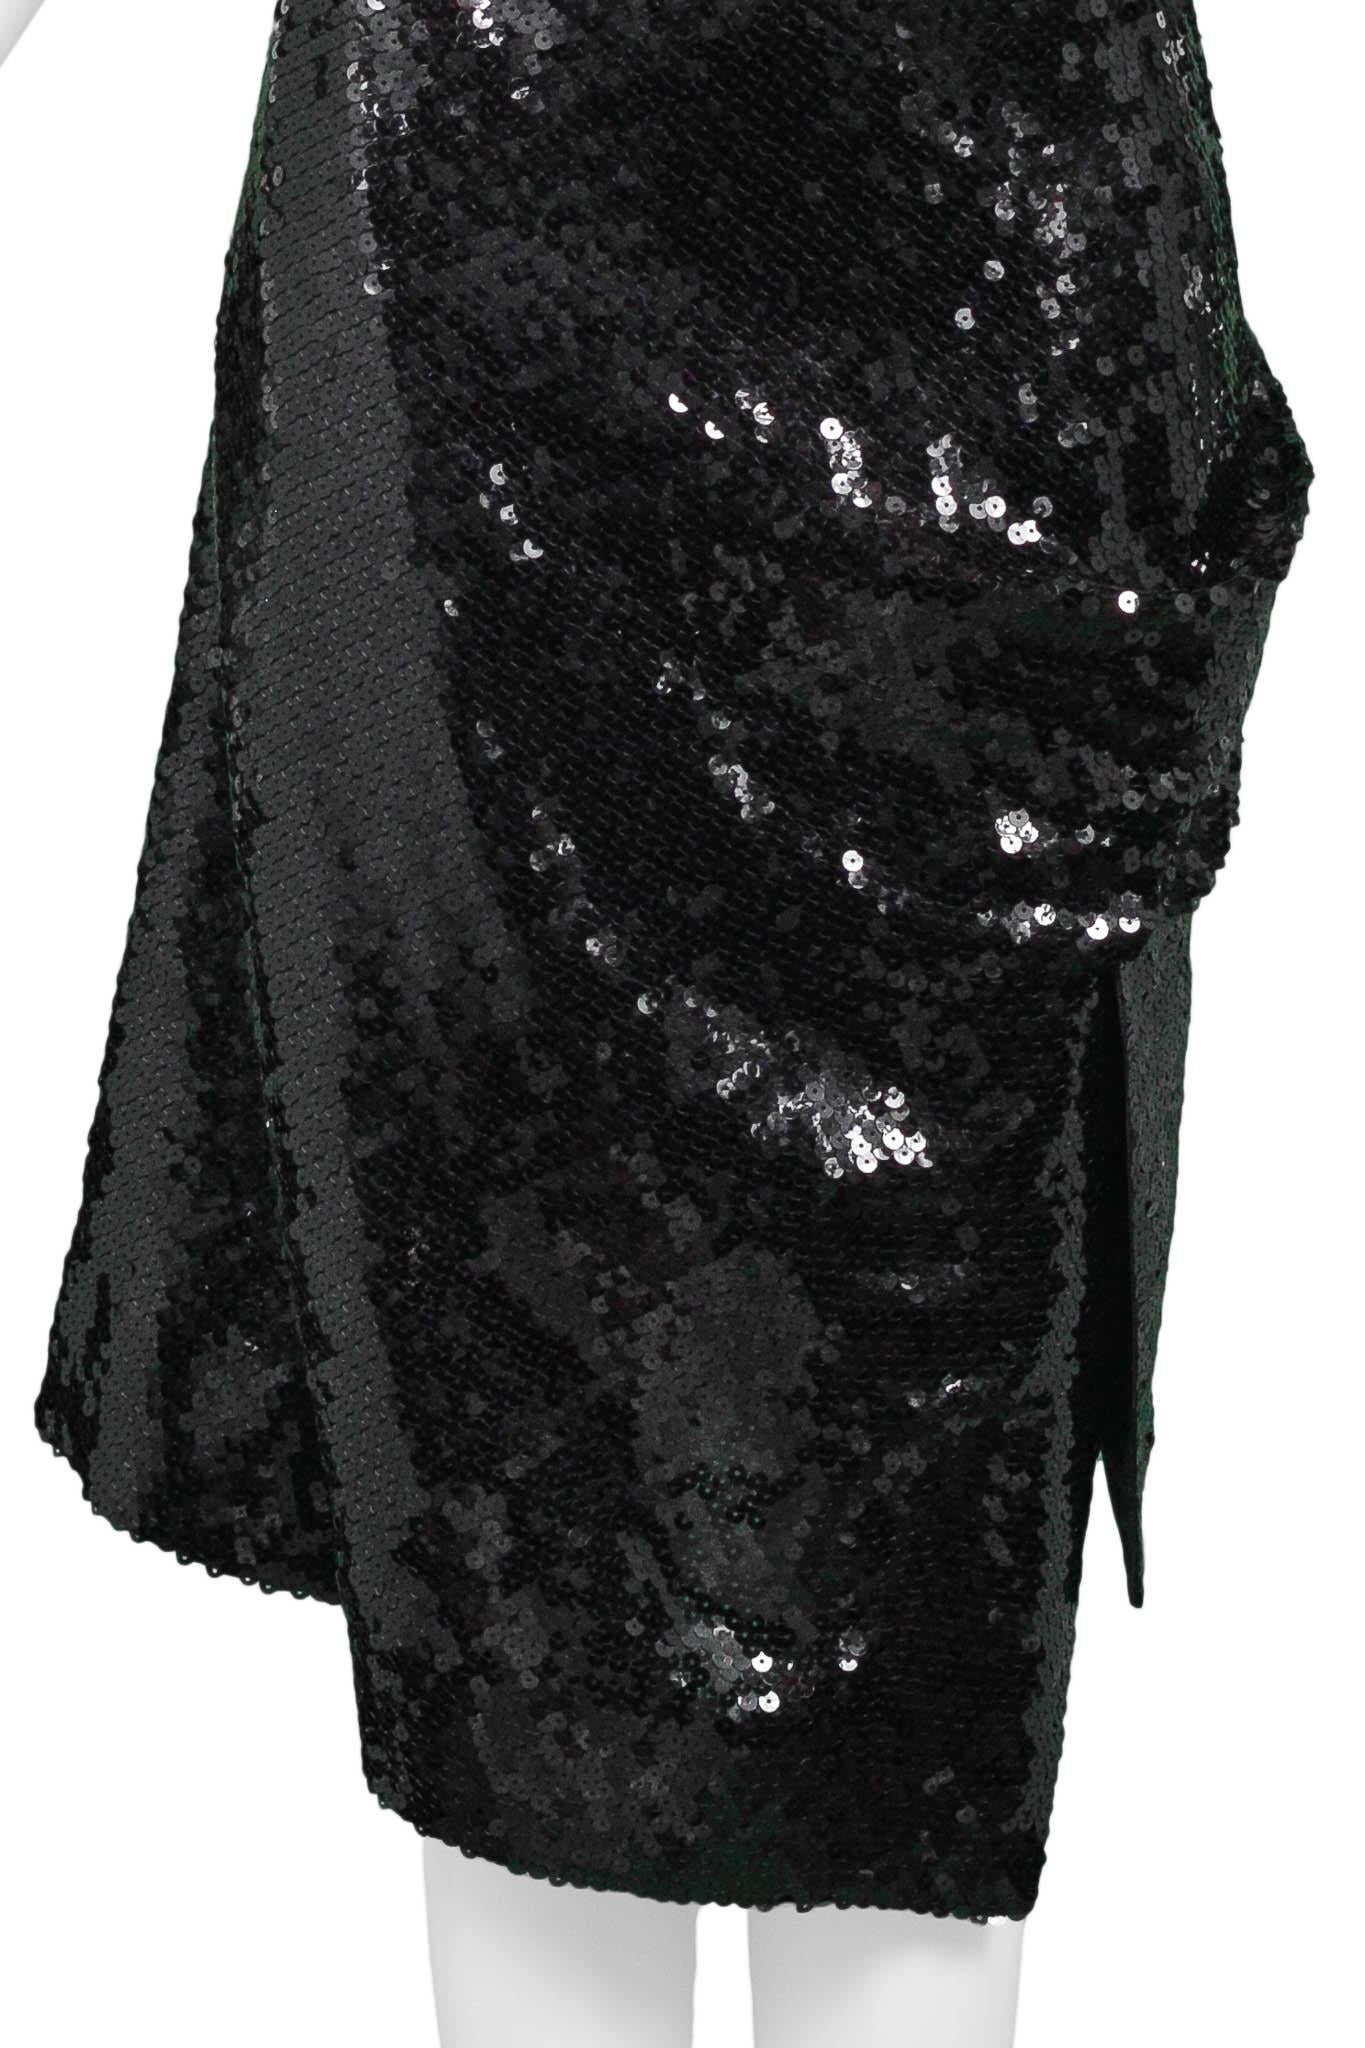 Vivienne Westwood Couture Black Sequin Strapless Dress For Sale 1